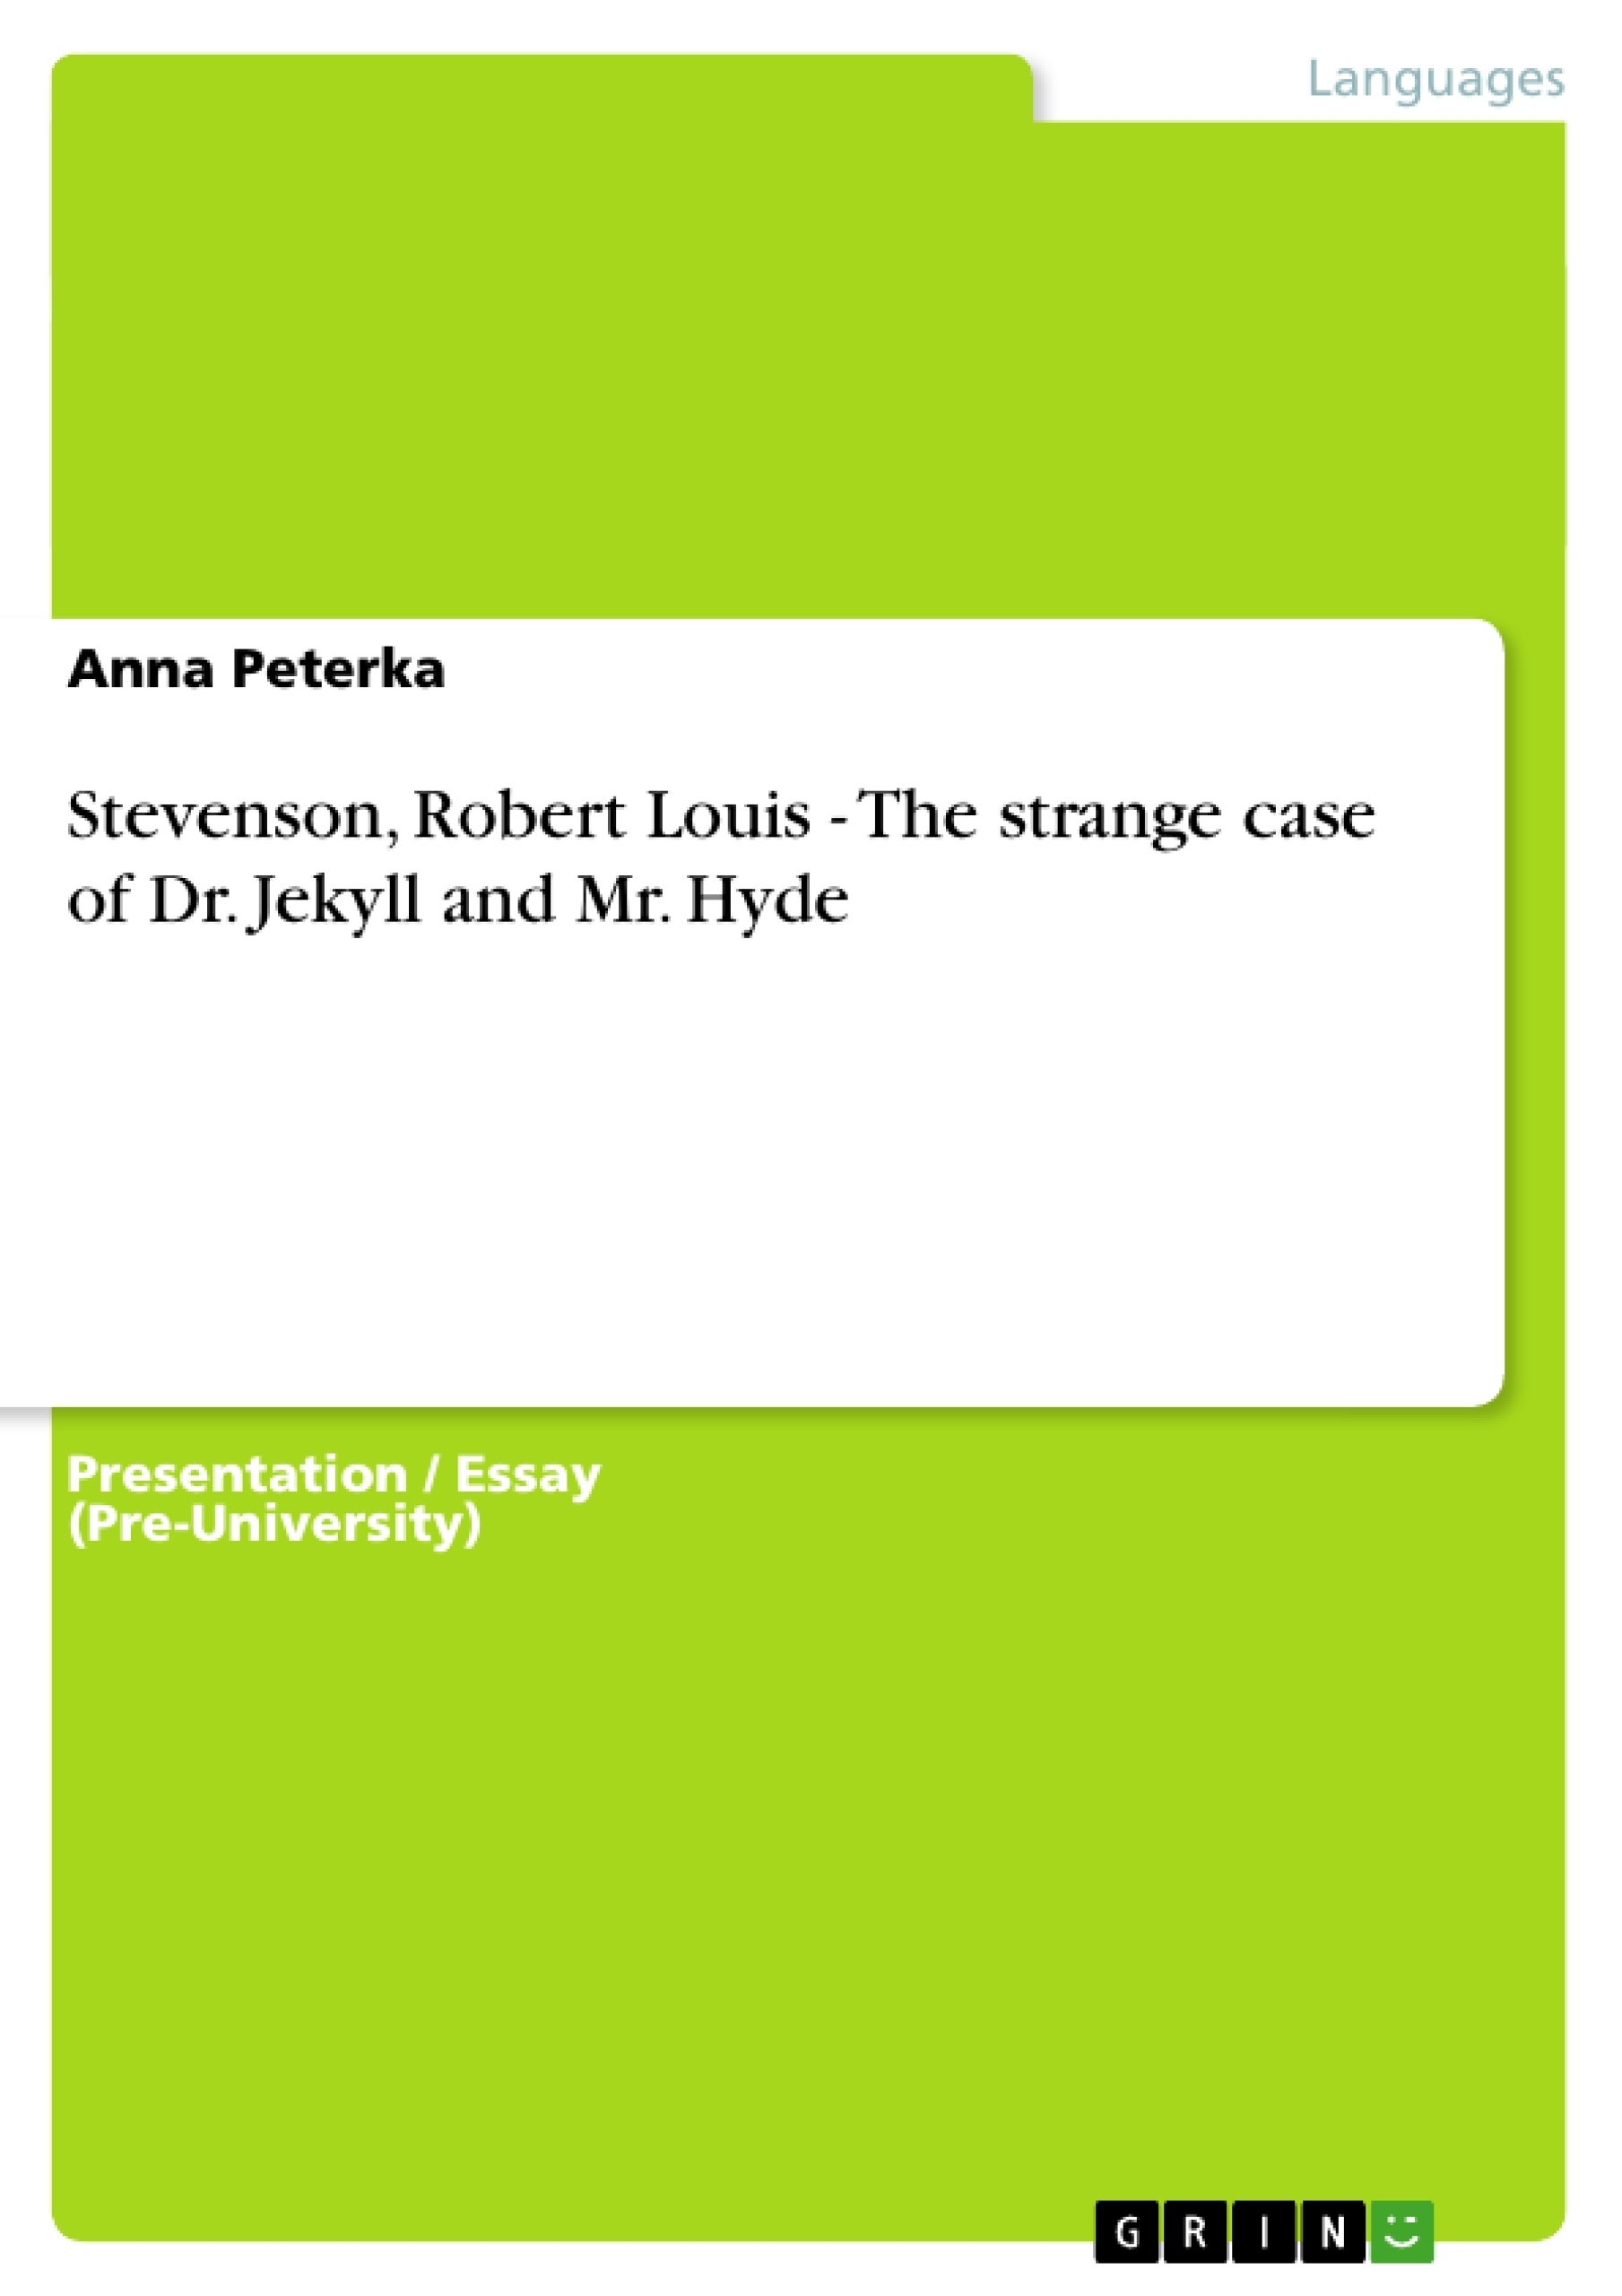 Título: Stevenson, Robert Louis - The strange case of Dr. Jekyll and Mr. Hyde